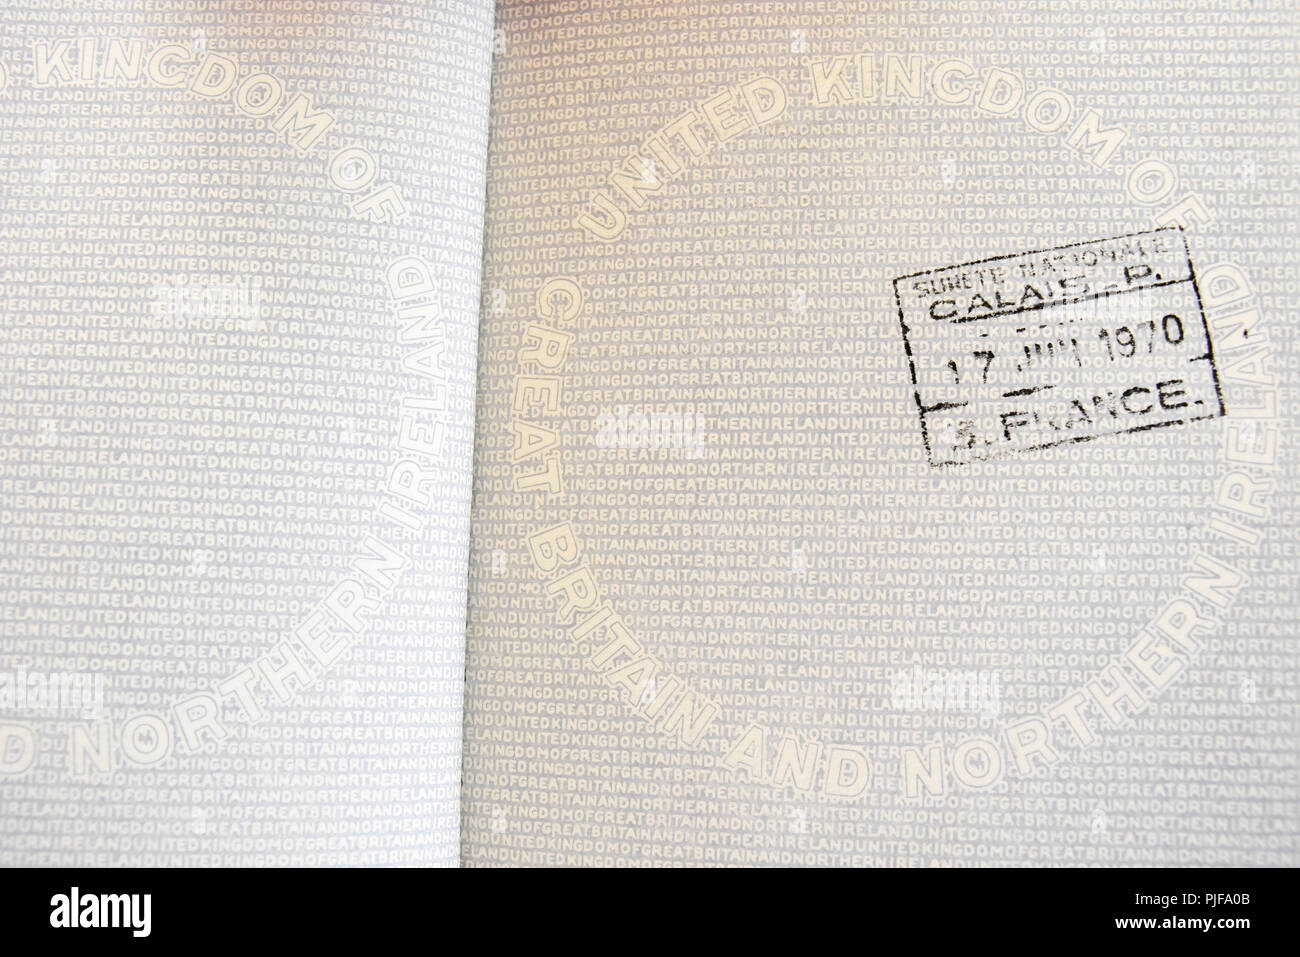 Inside Page British Passport Stock Photos Inside Page British